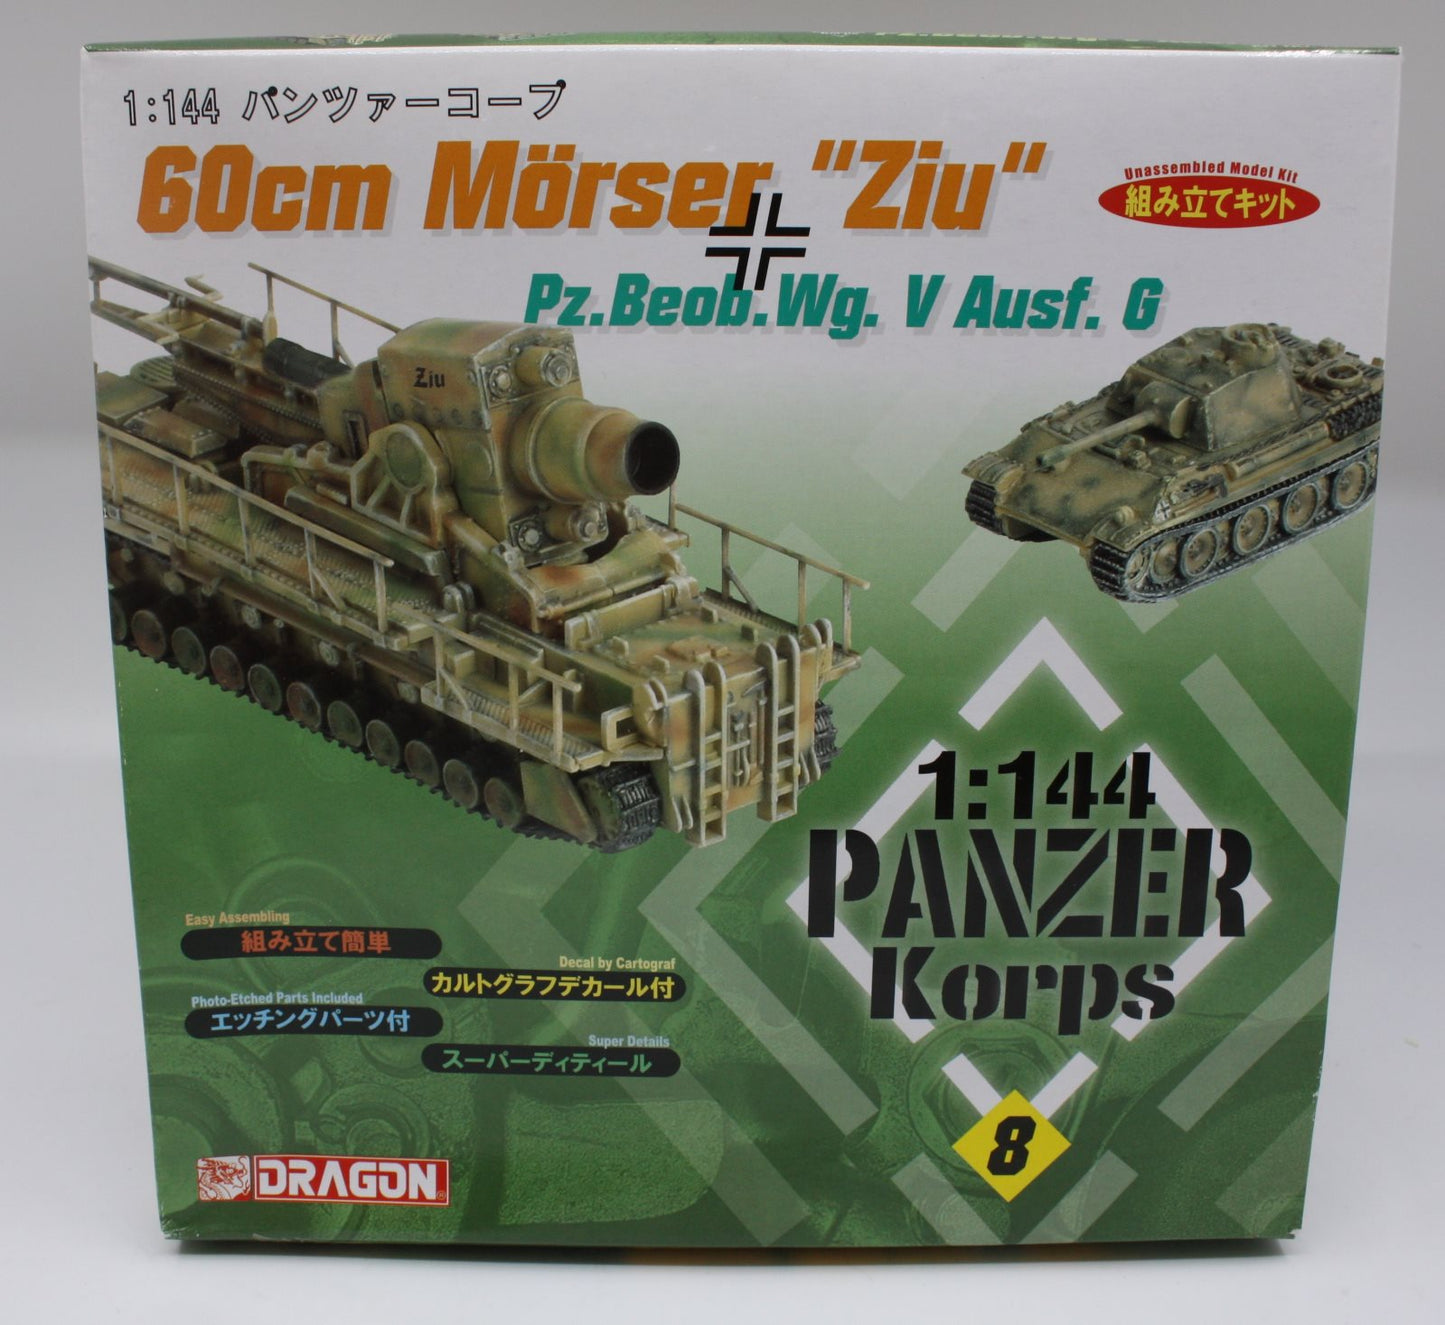 Dragon 14508 1:144 #8 60 cm Morser "Ziu" Pz. Beob. Wg. V Ausf. G Tank Kit